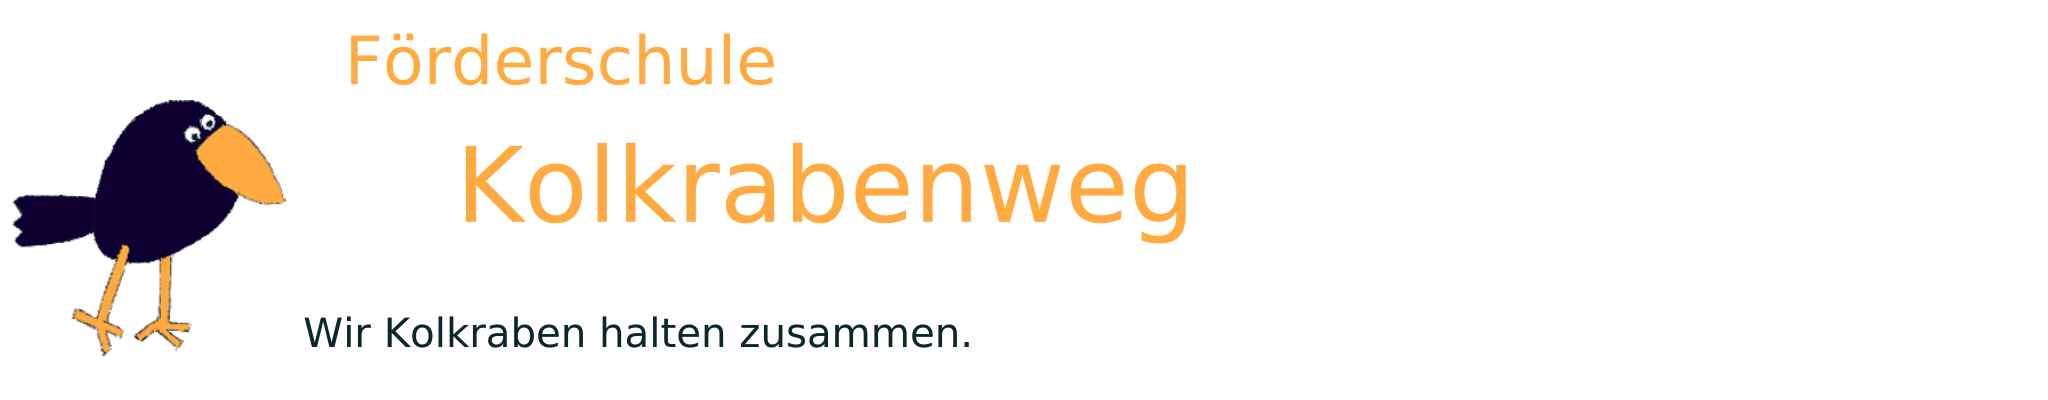 Logo der Förderschule Kolkrabenweg